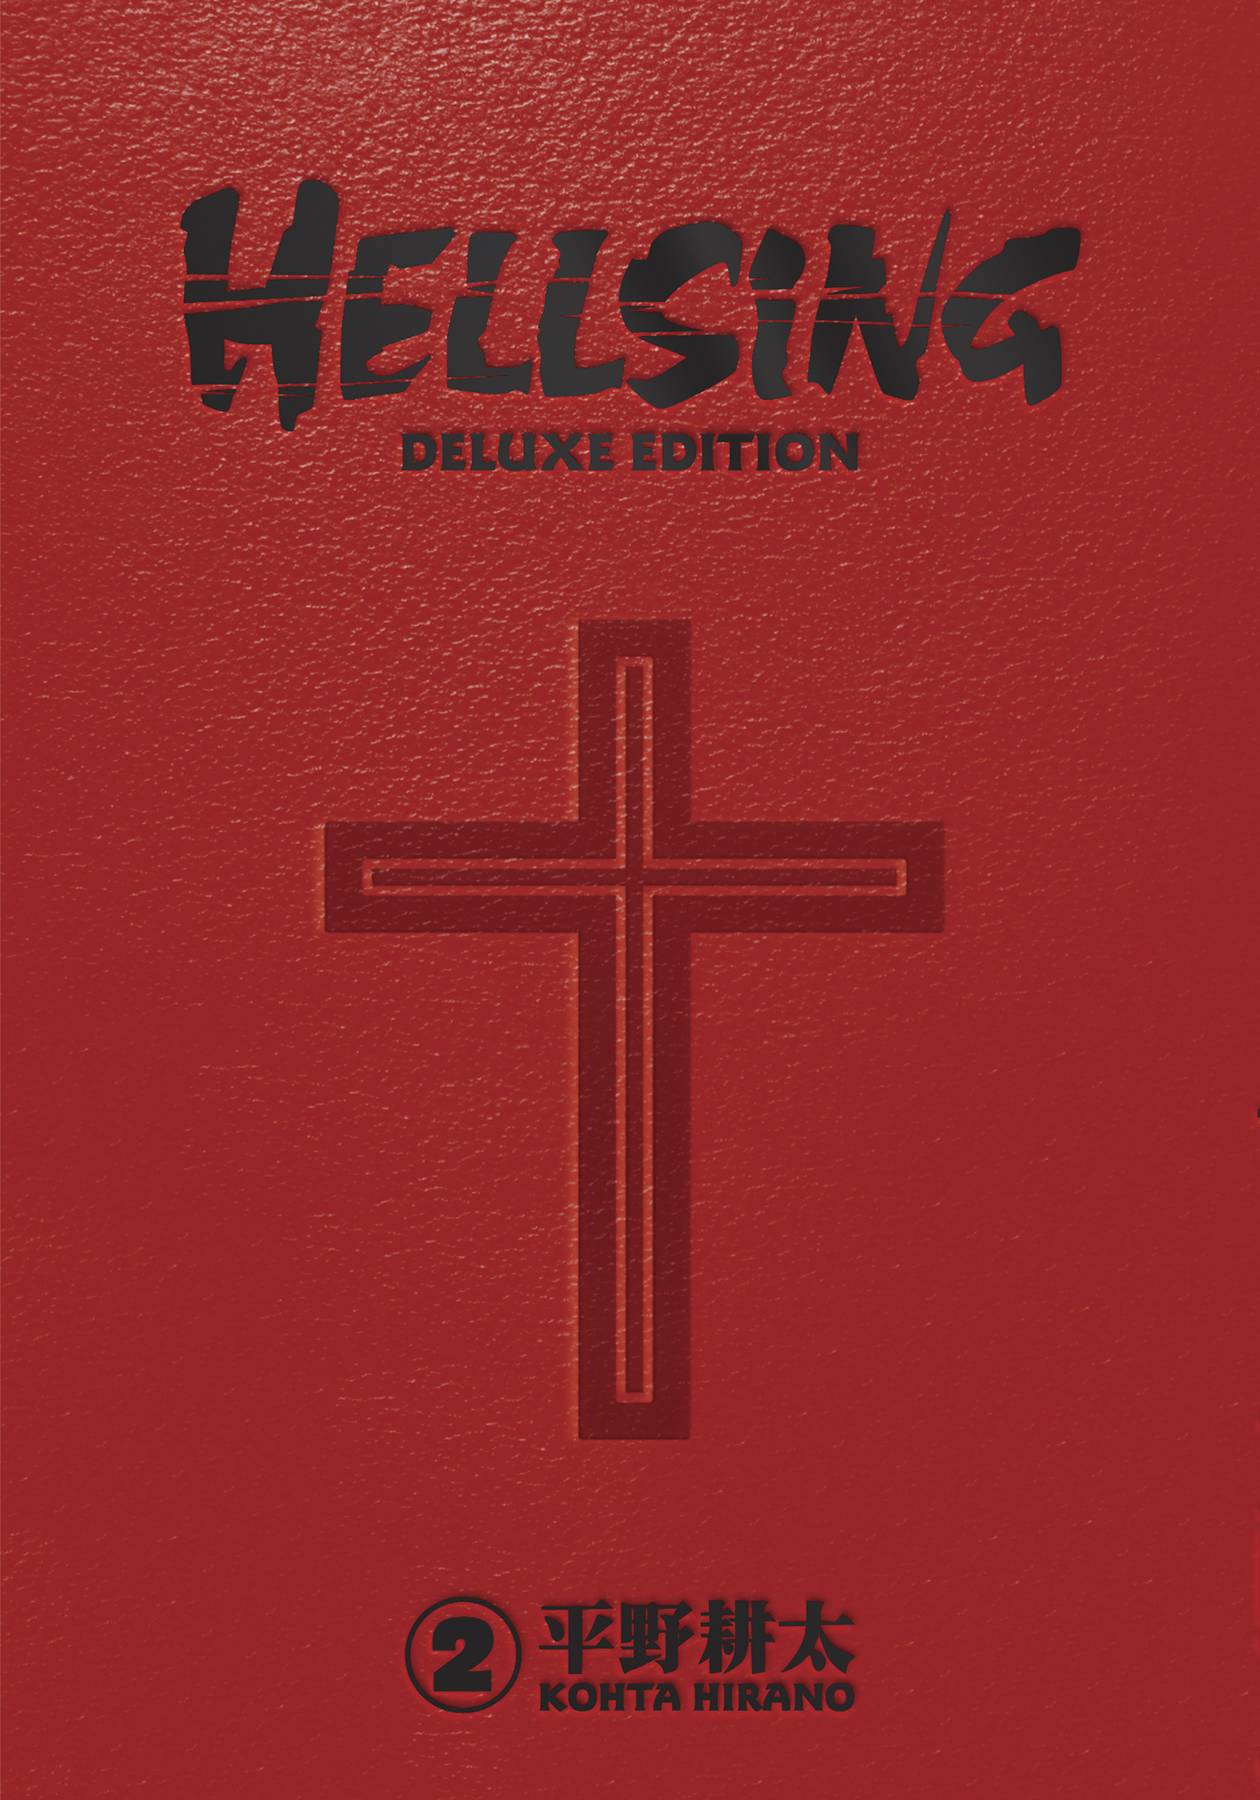 Hellsing - Deluxe Edition Volume 2 HC